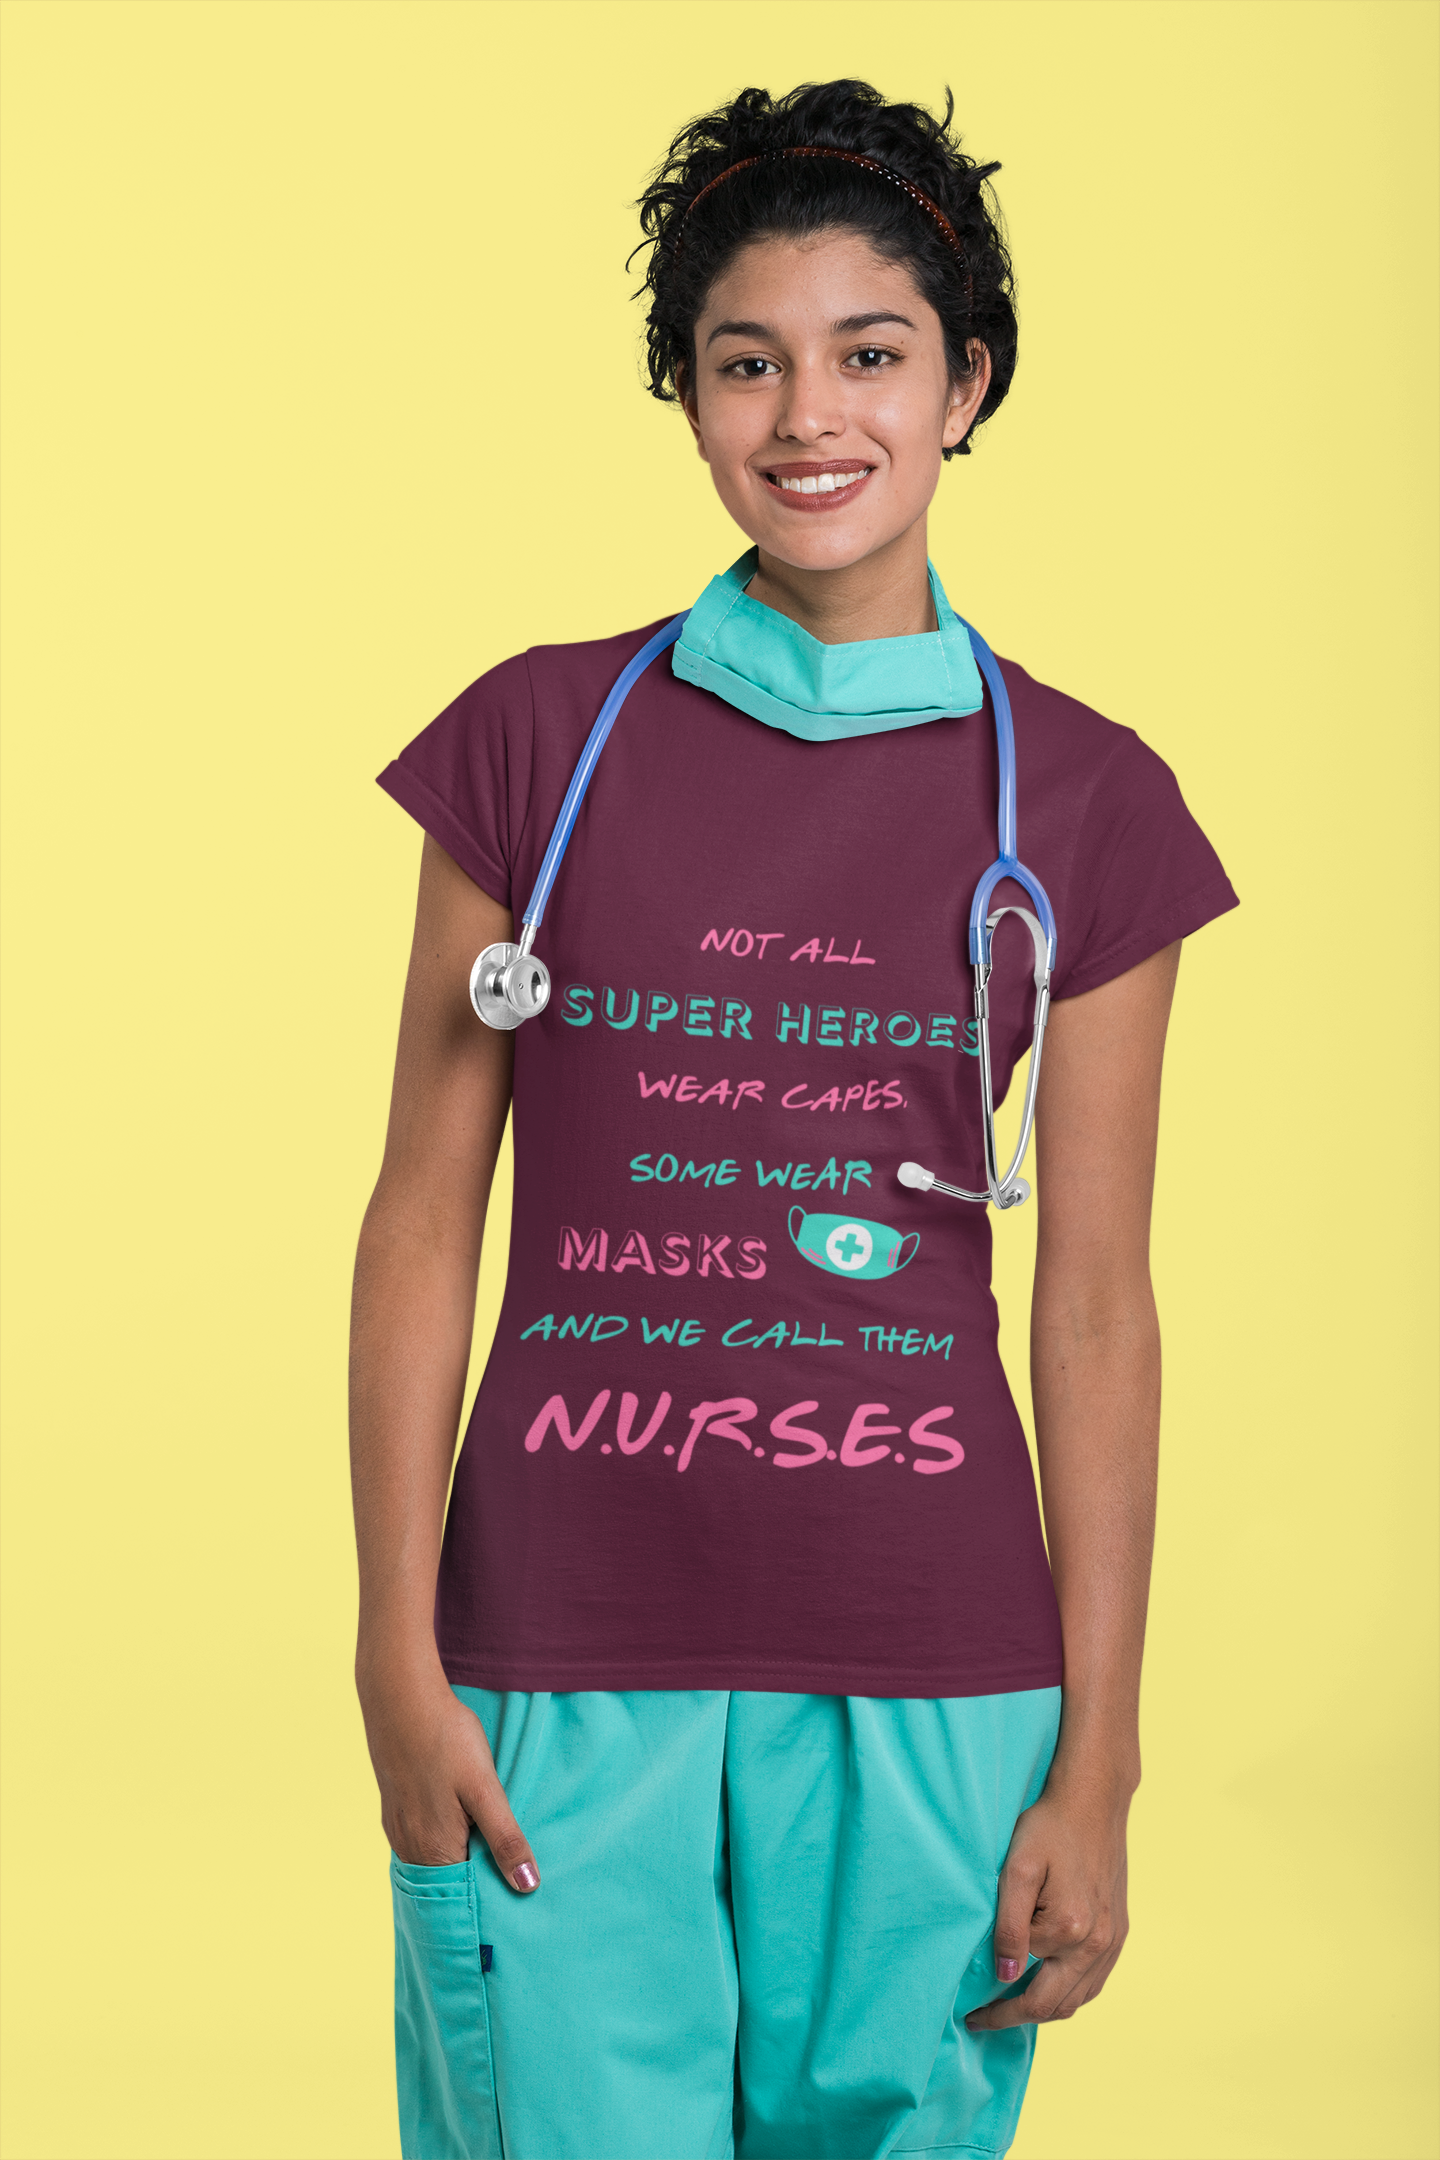 Nurses are Super Heroes Tshirt